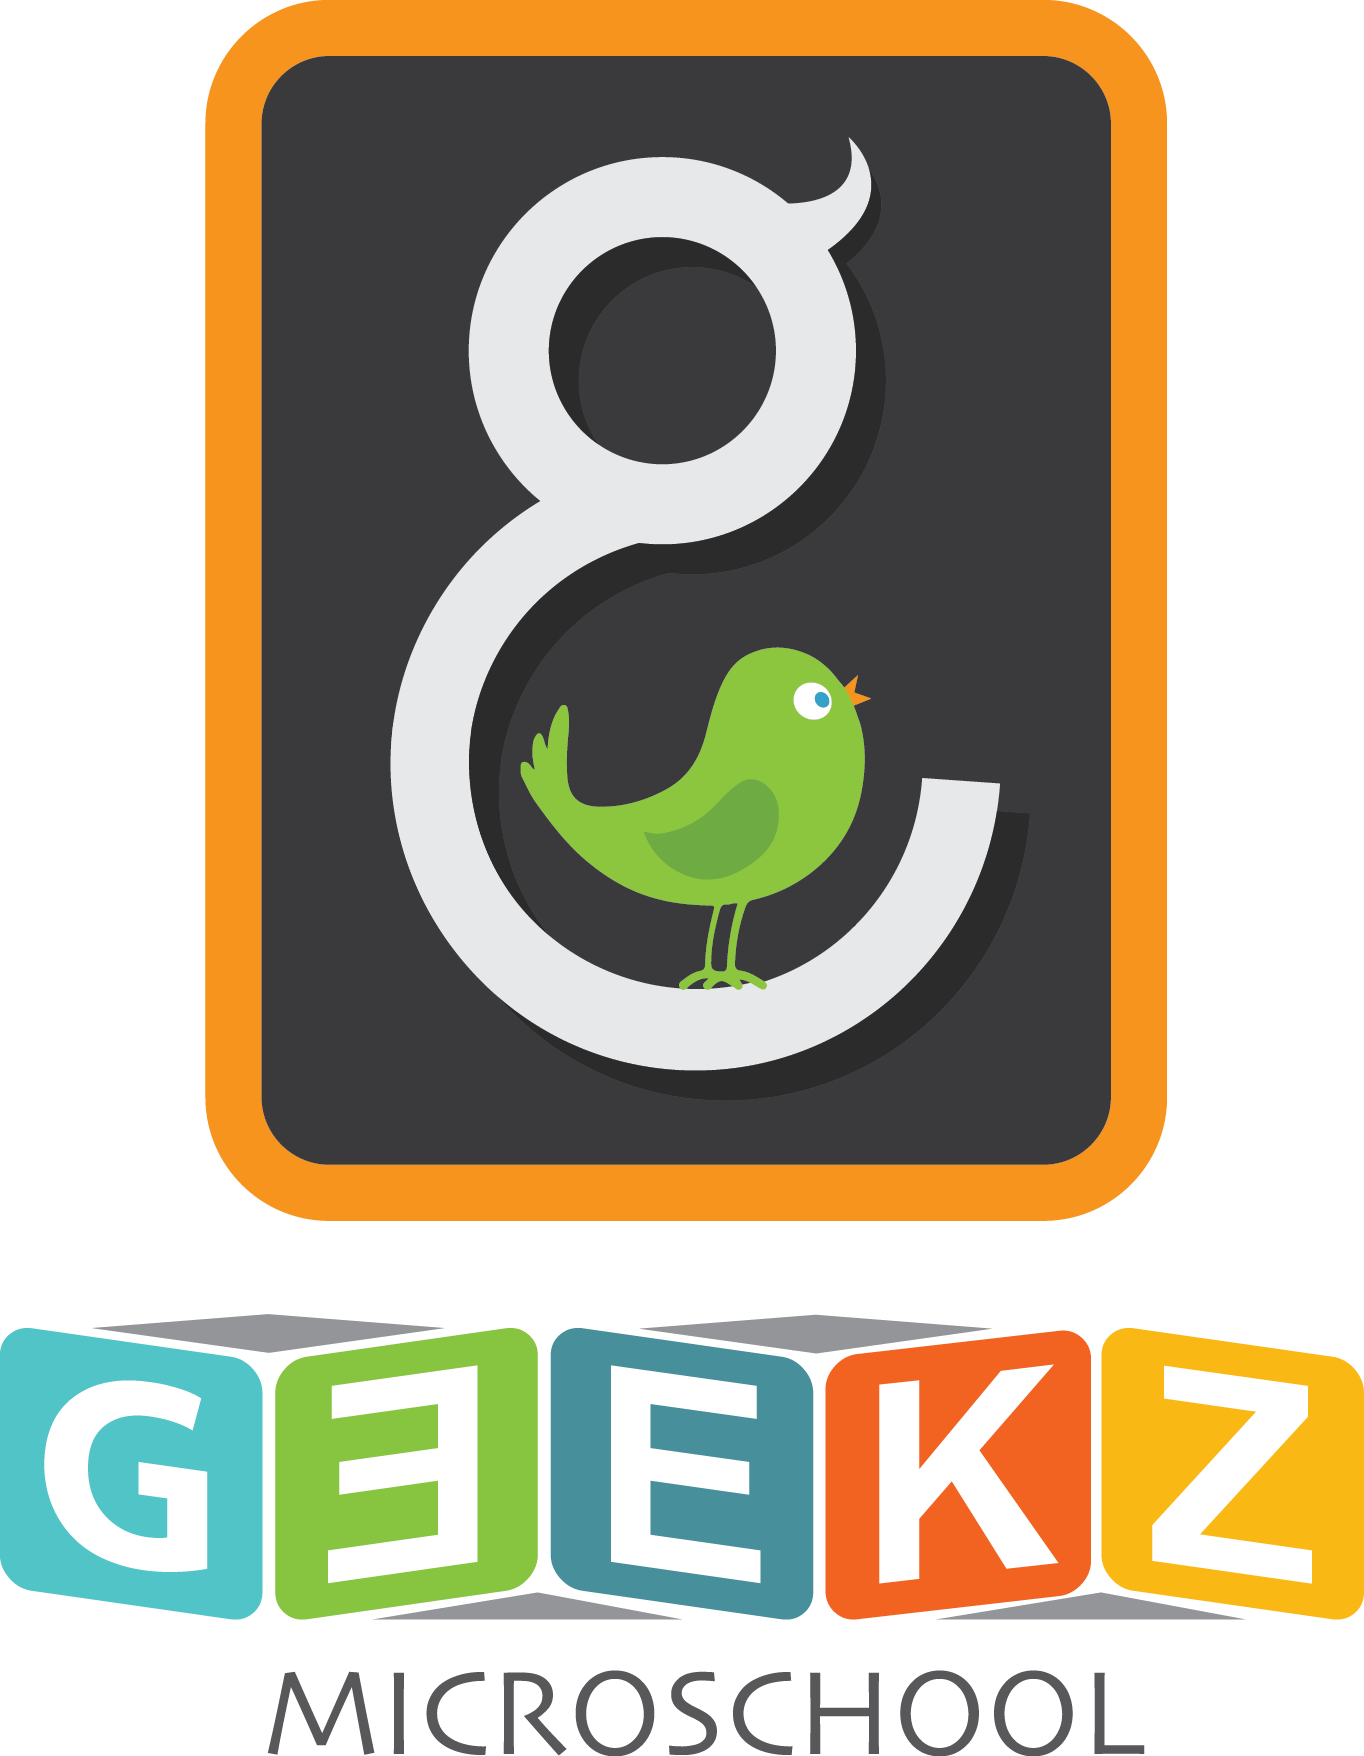 Geekz Microschool